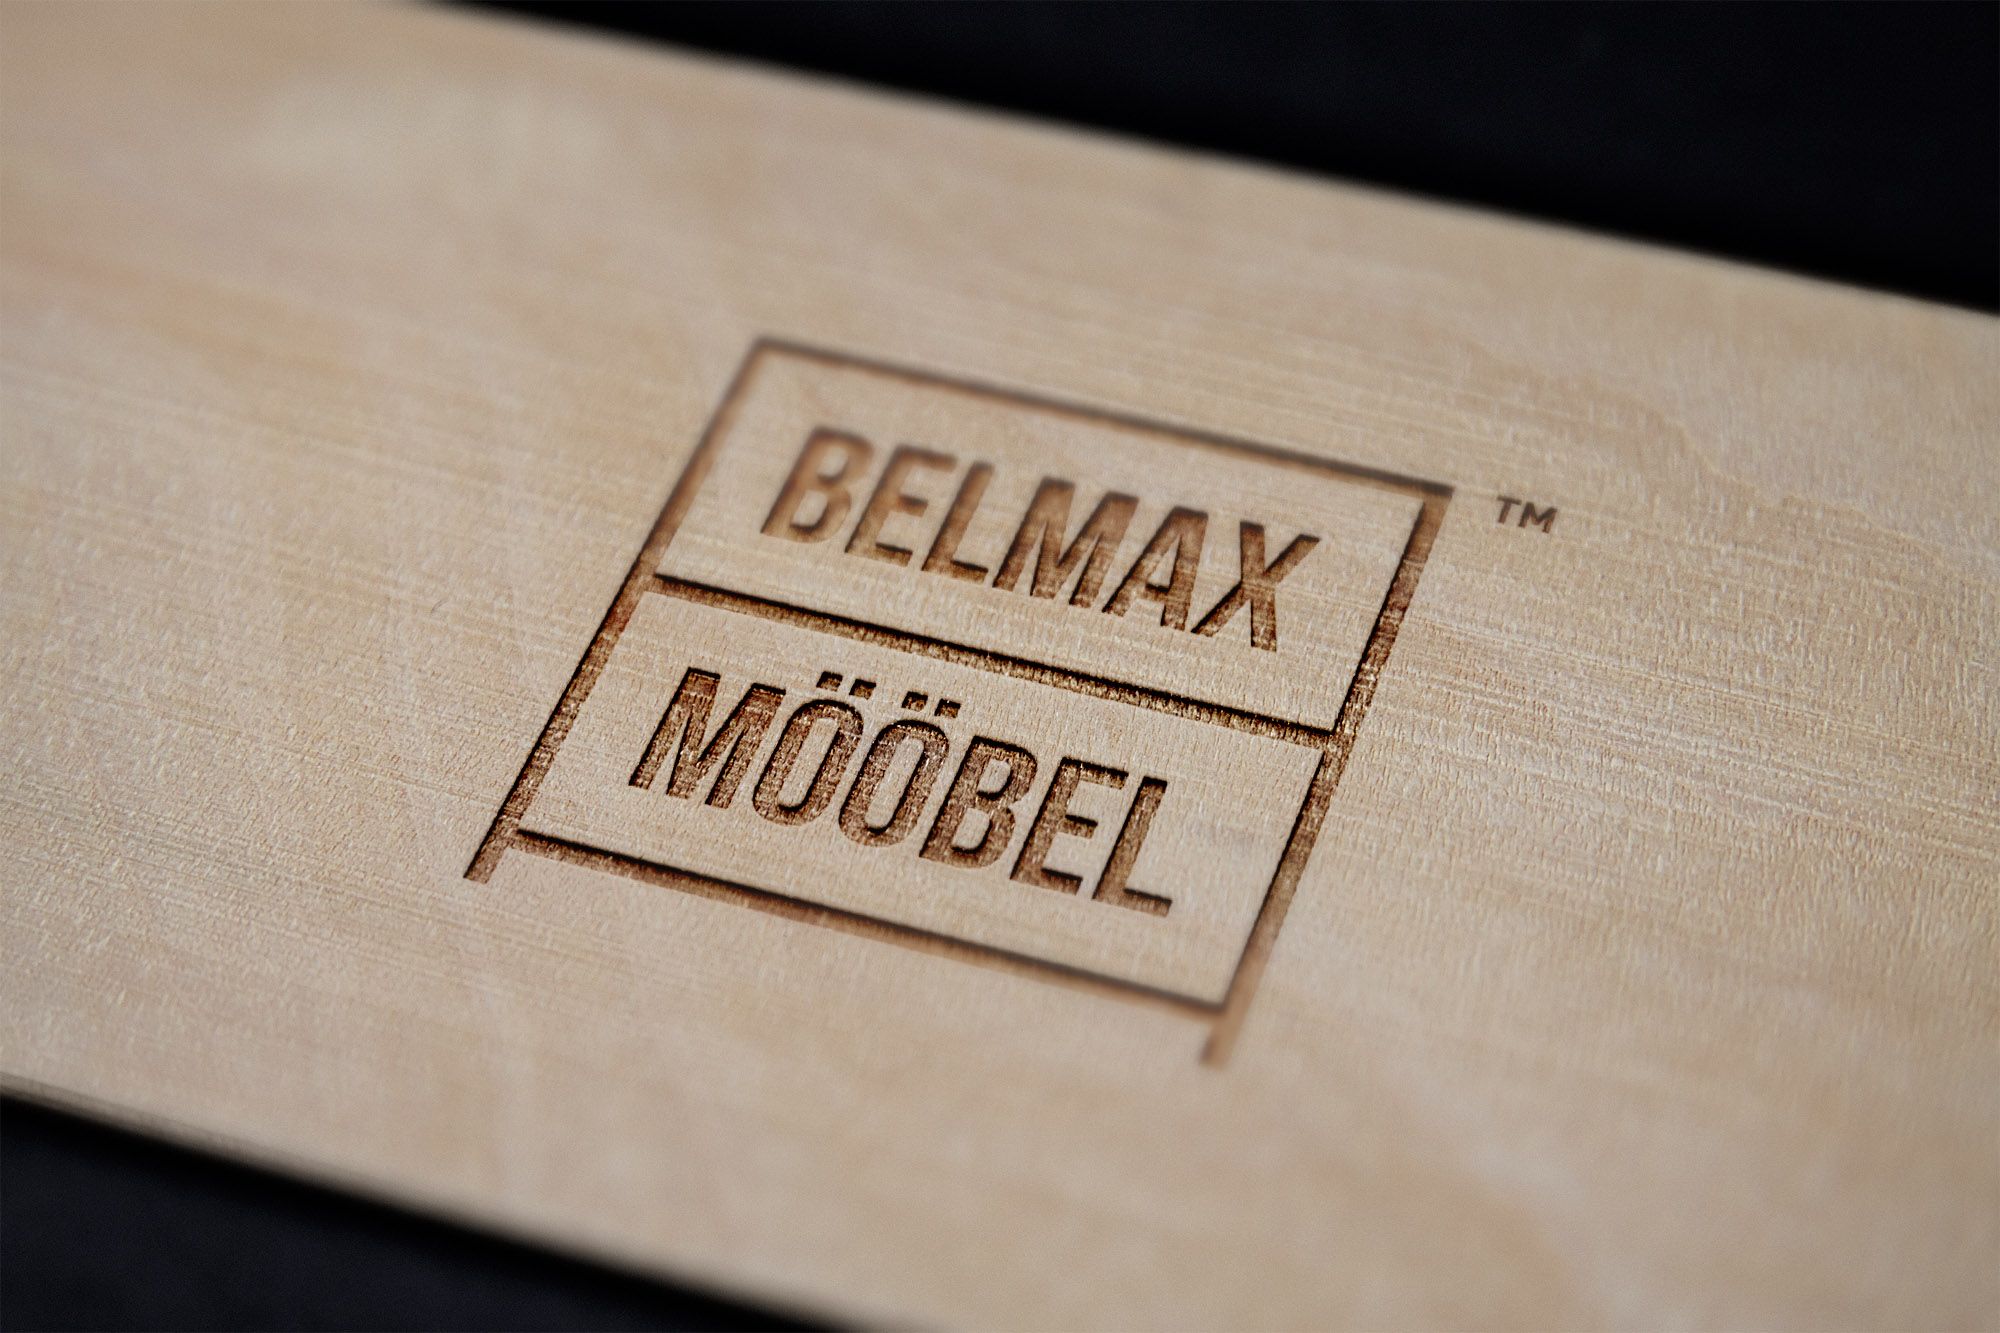 Логотип для BelMax mööbel - дизайнер peardesign